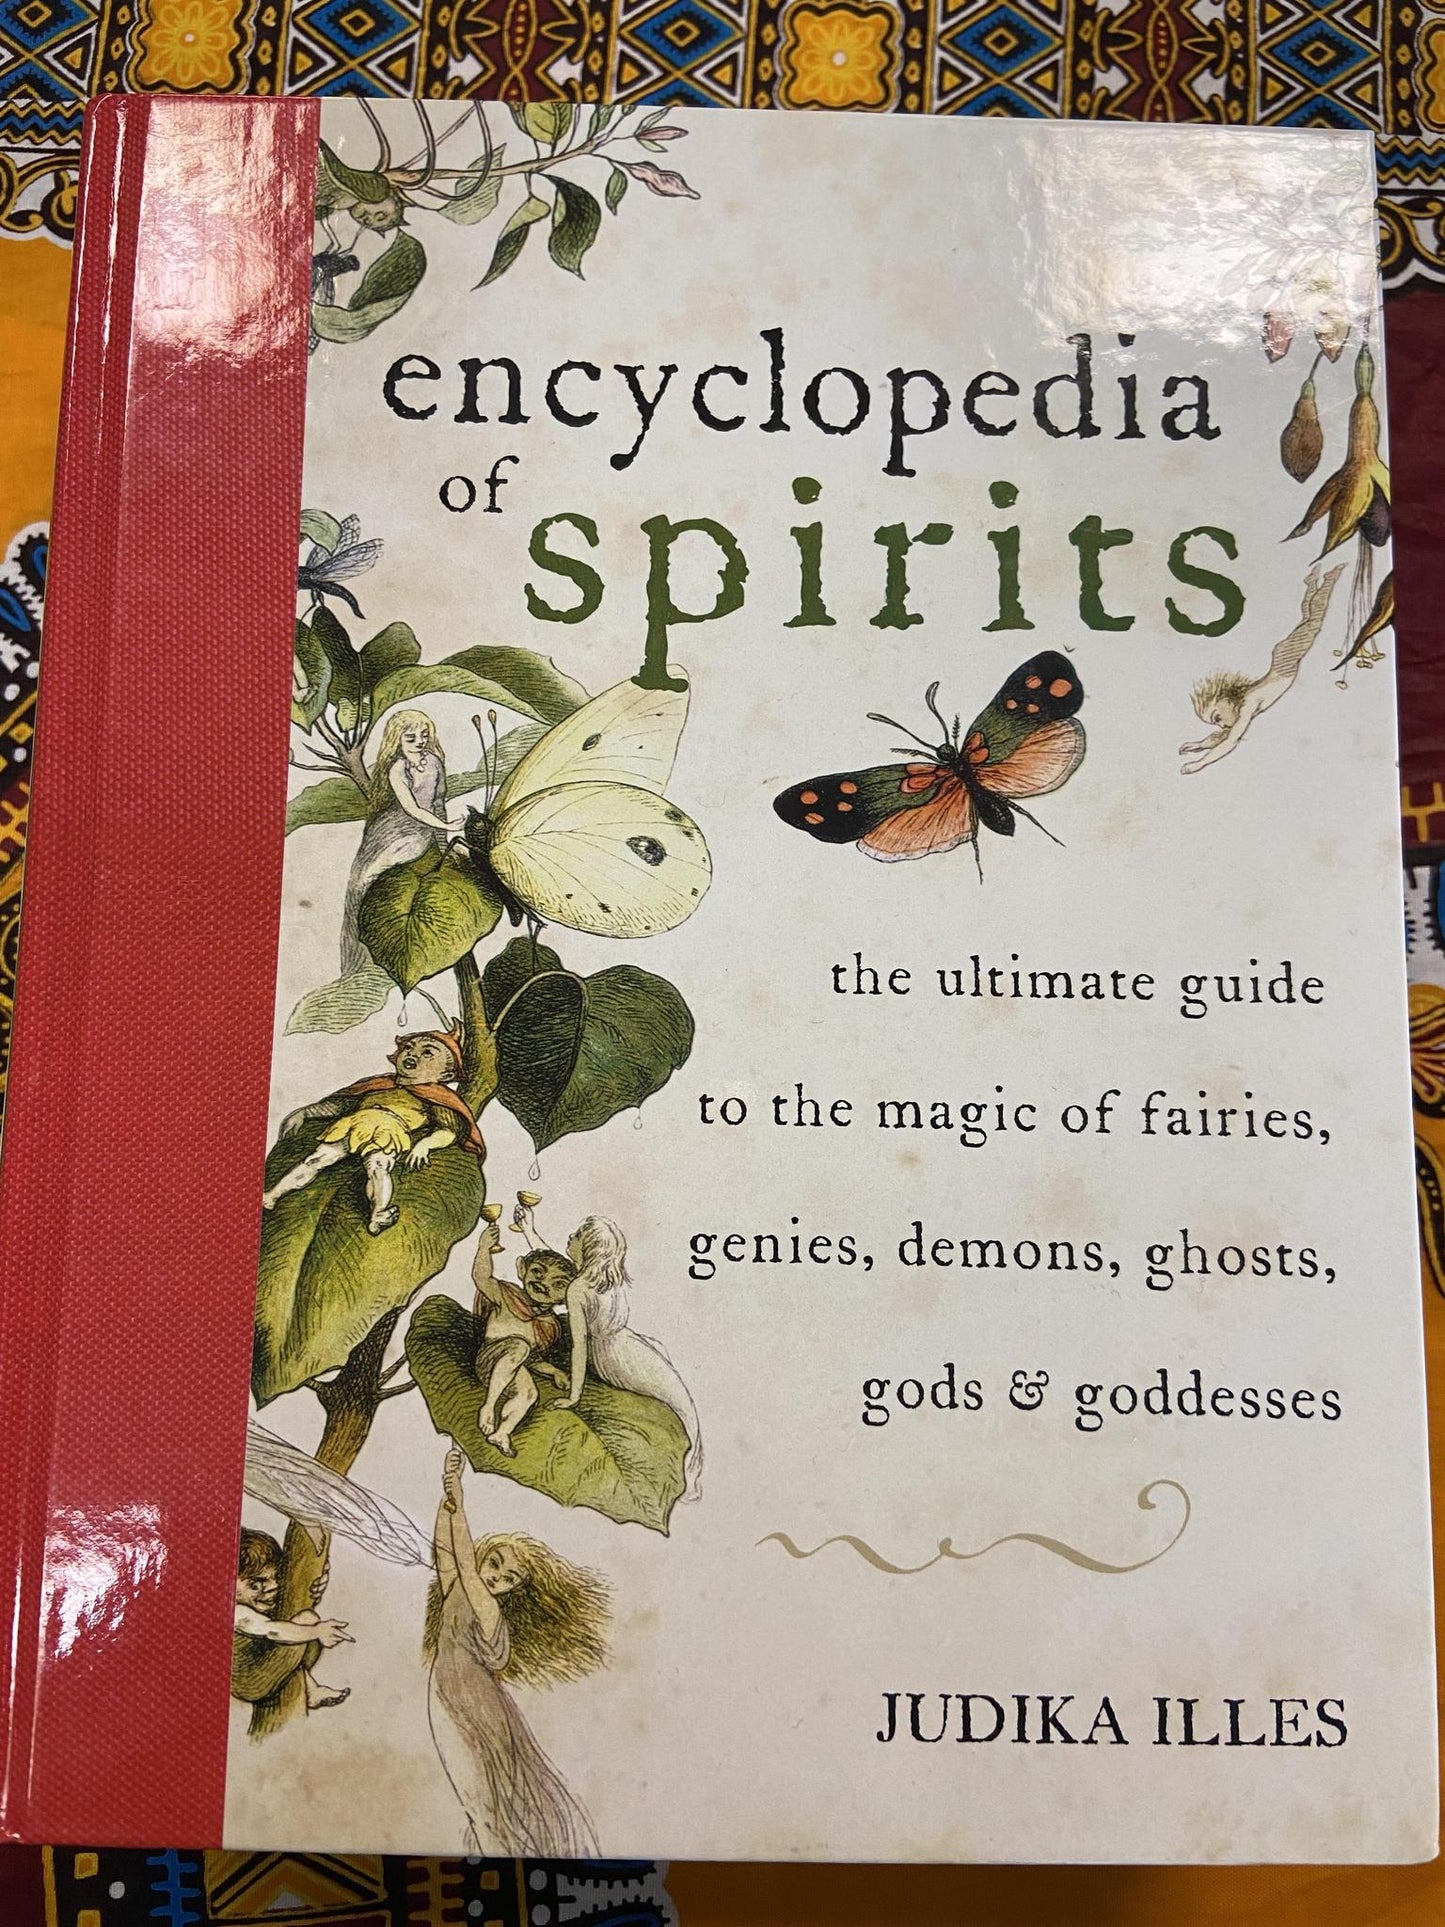 "Encyclopedia of Spirits" by Judika Illes